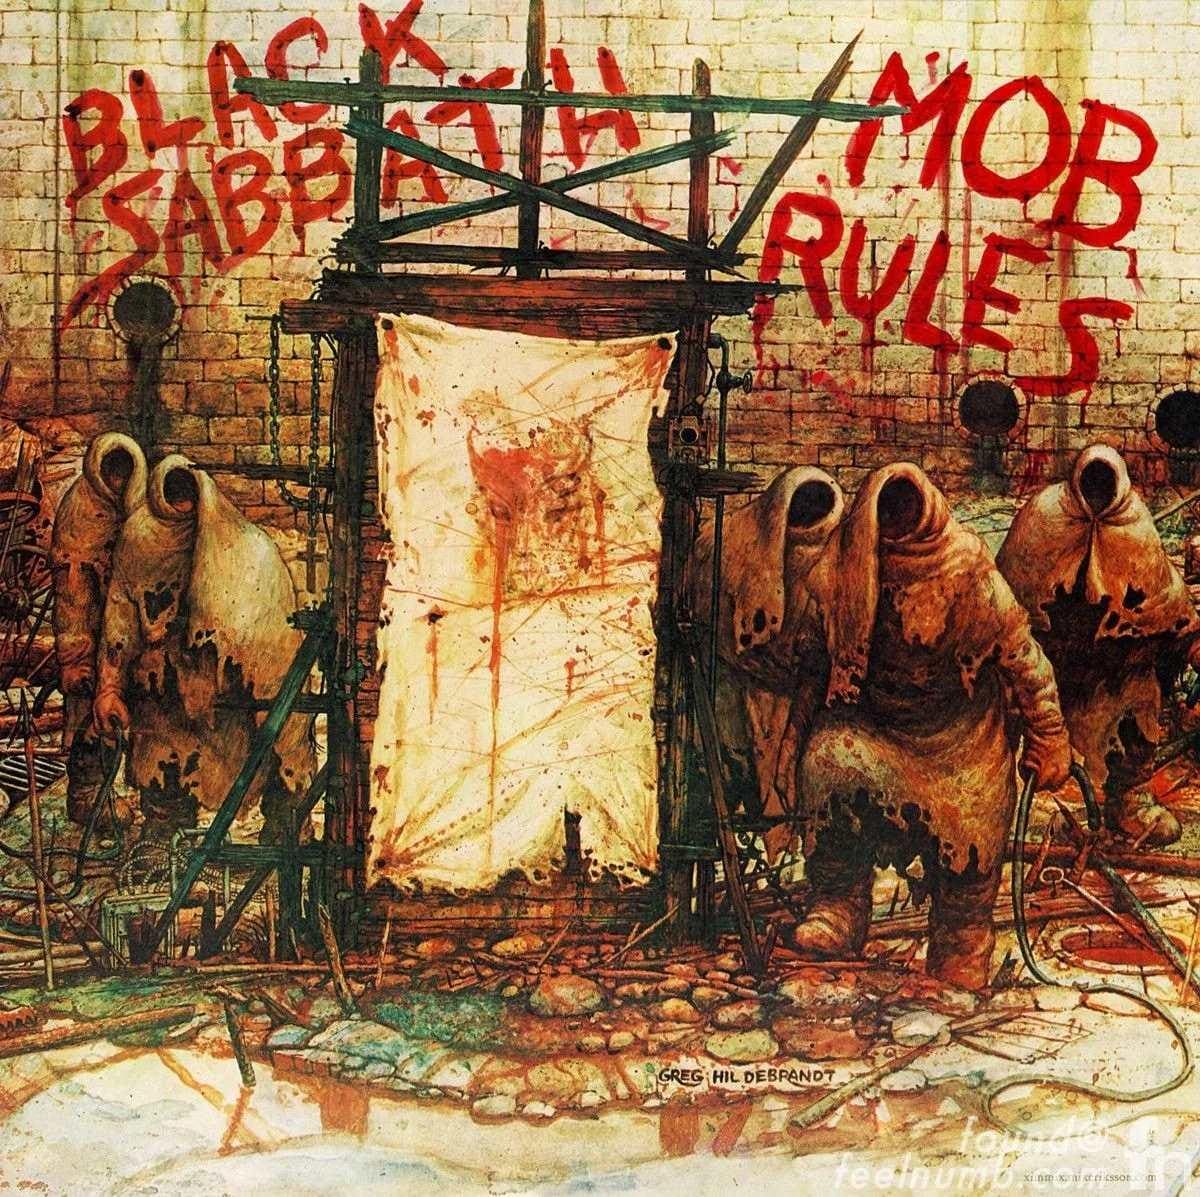 BLACK SABBATH - Mob Rules Vinyl - JWrayRecords